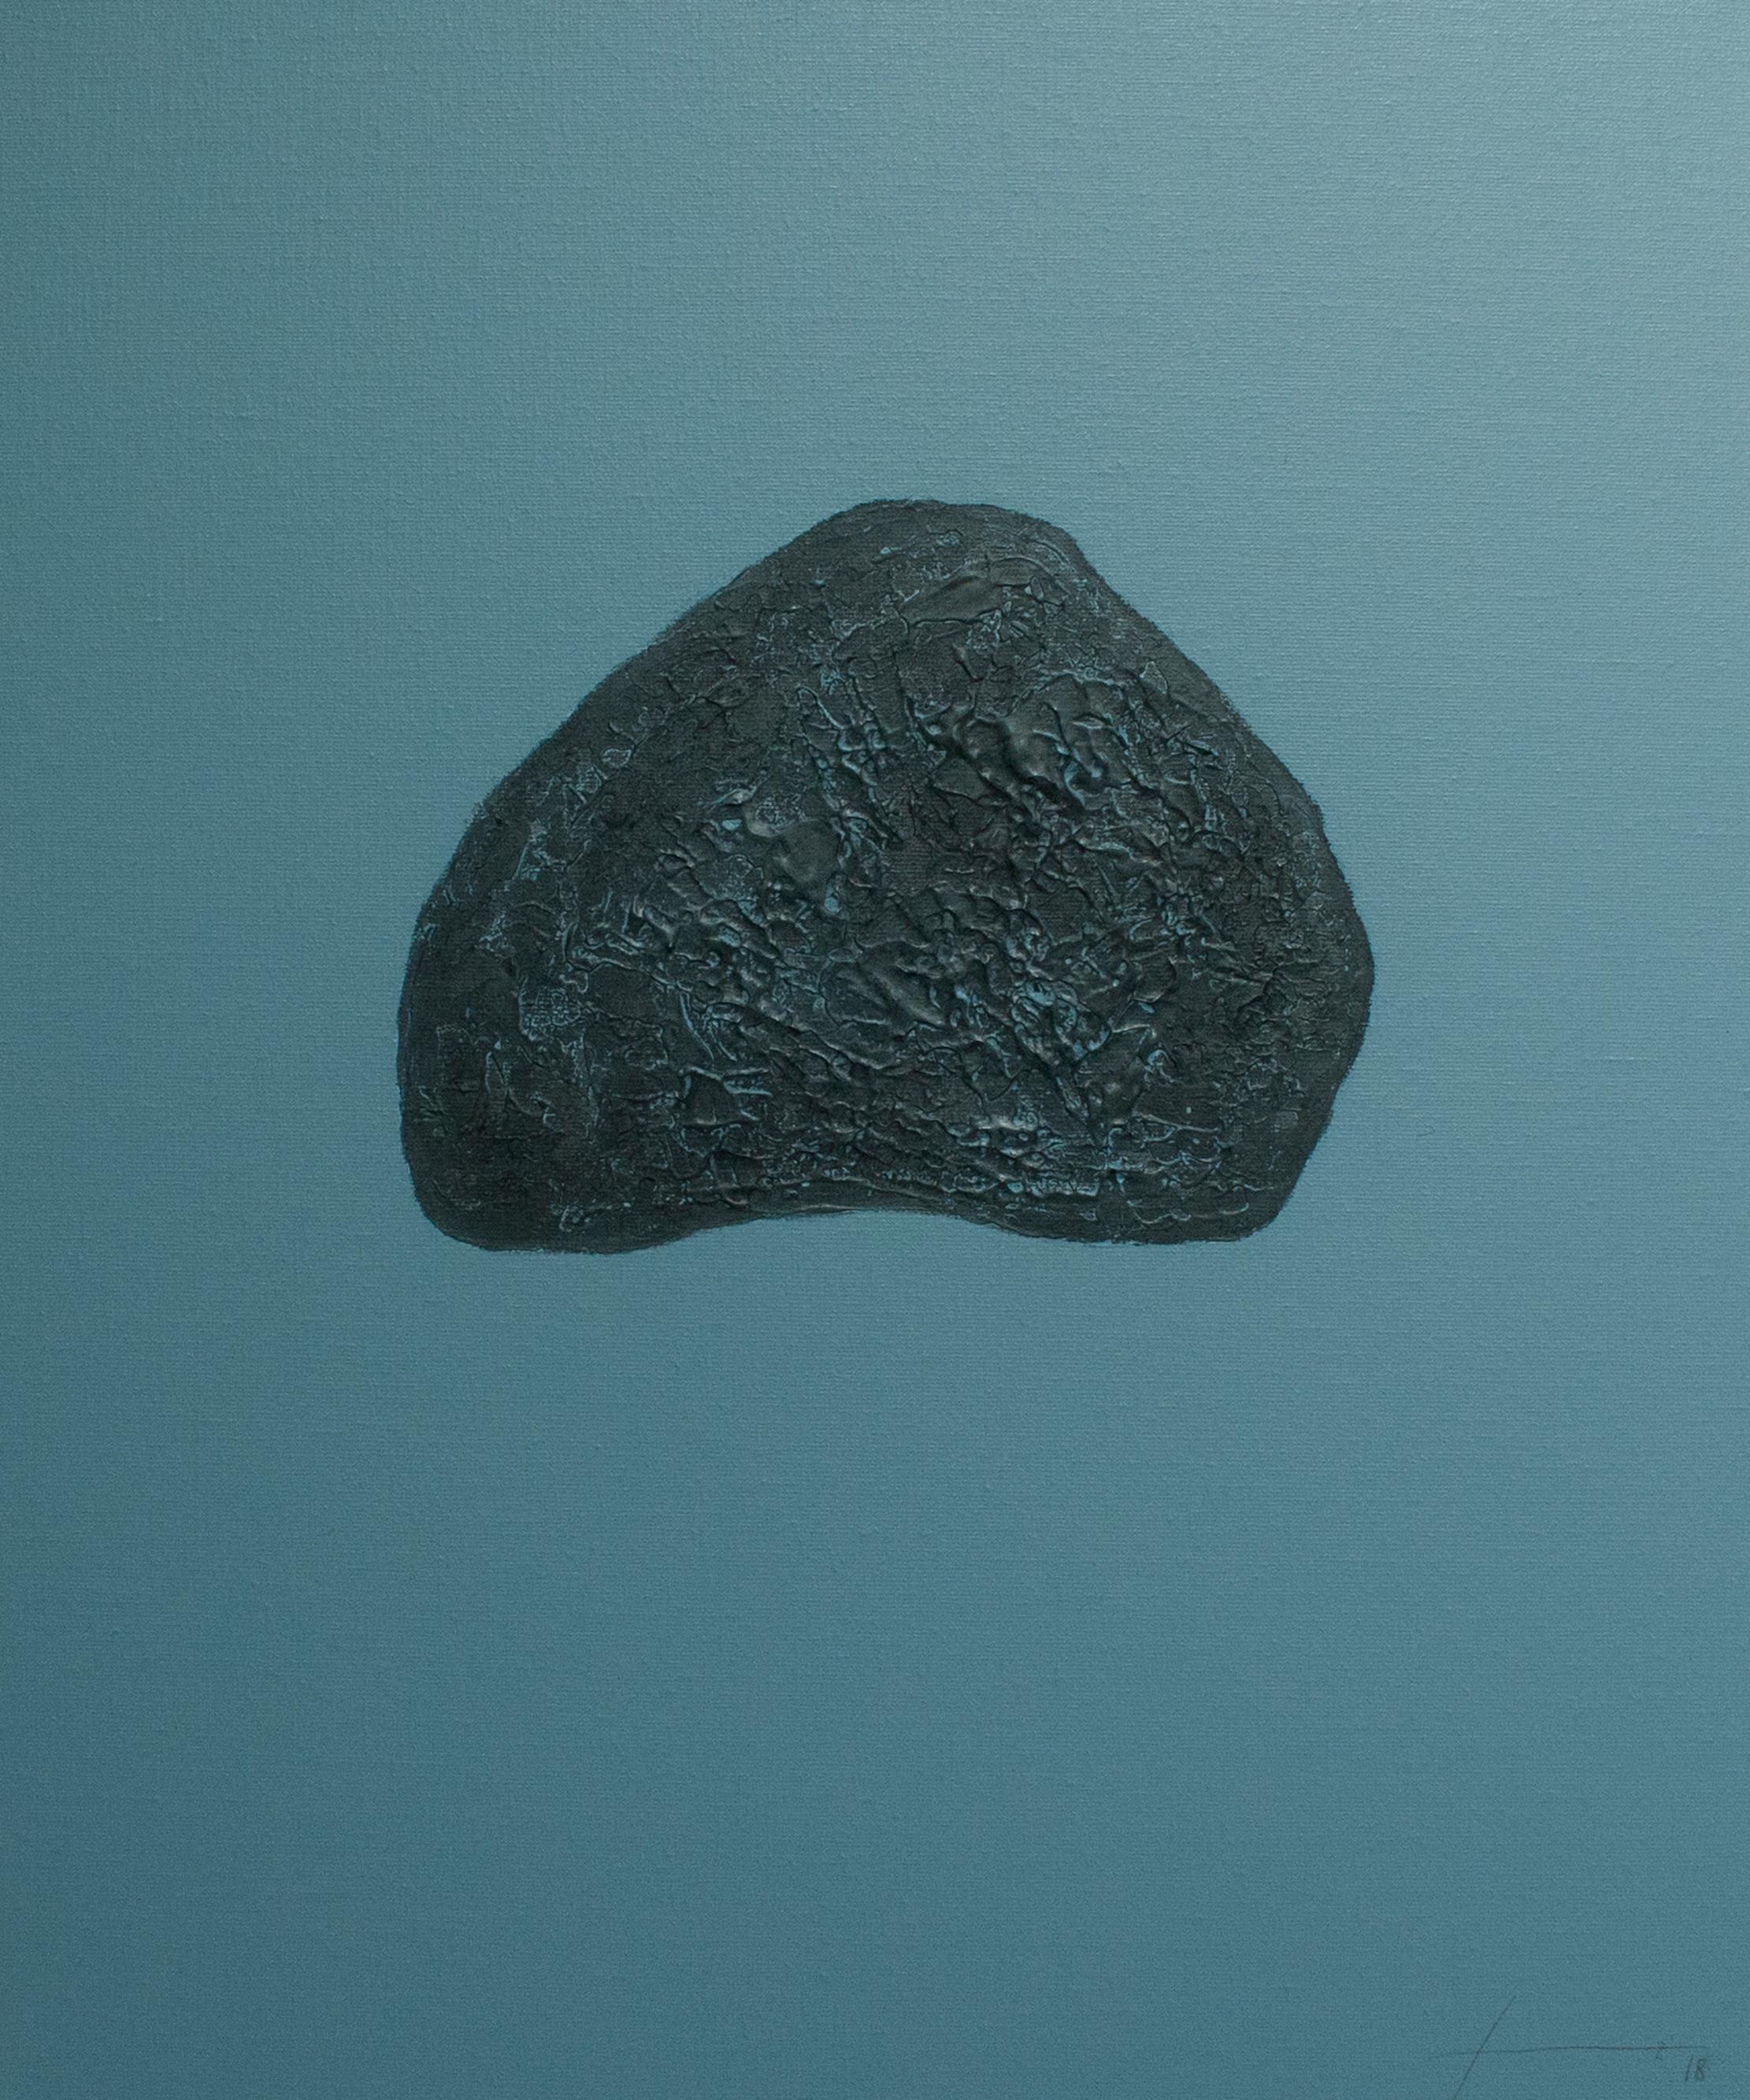 Stones XXX (II) - 21st Century, Contemporary, Abstract Painting, Mixed Media